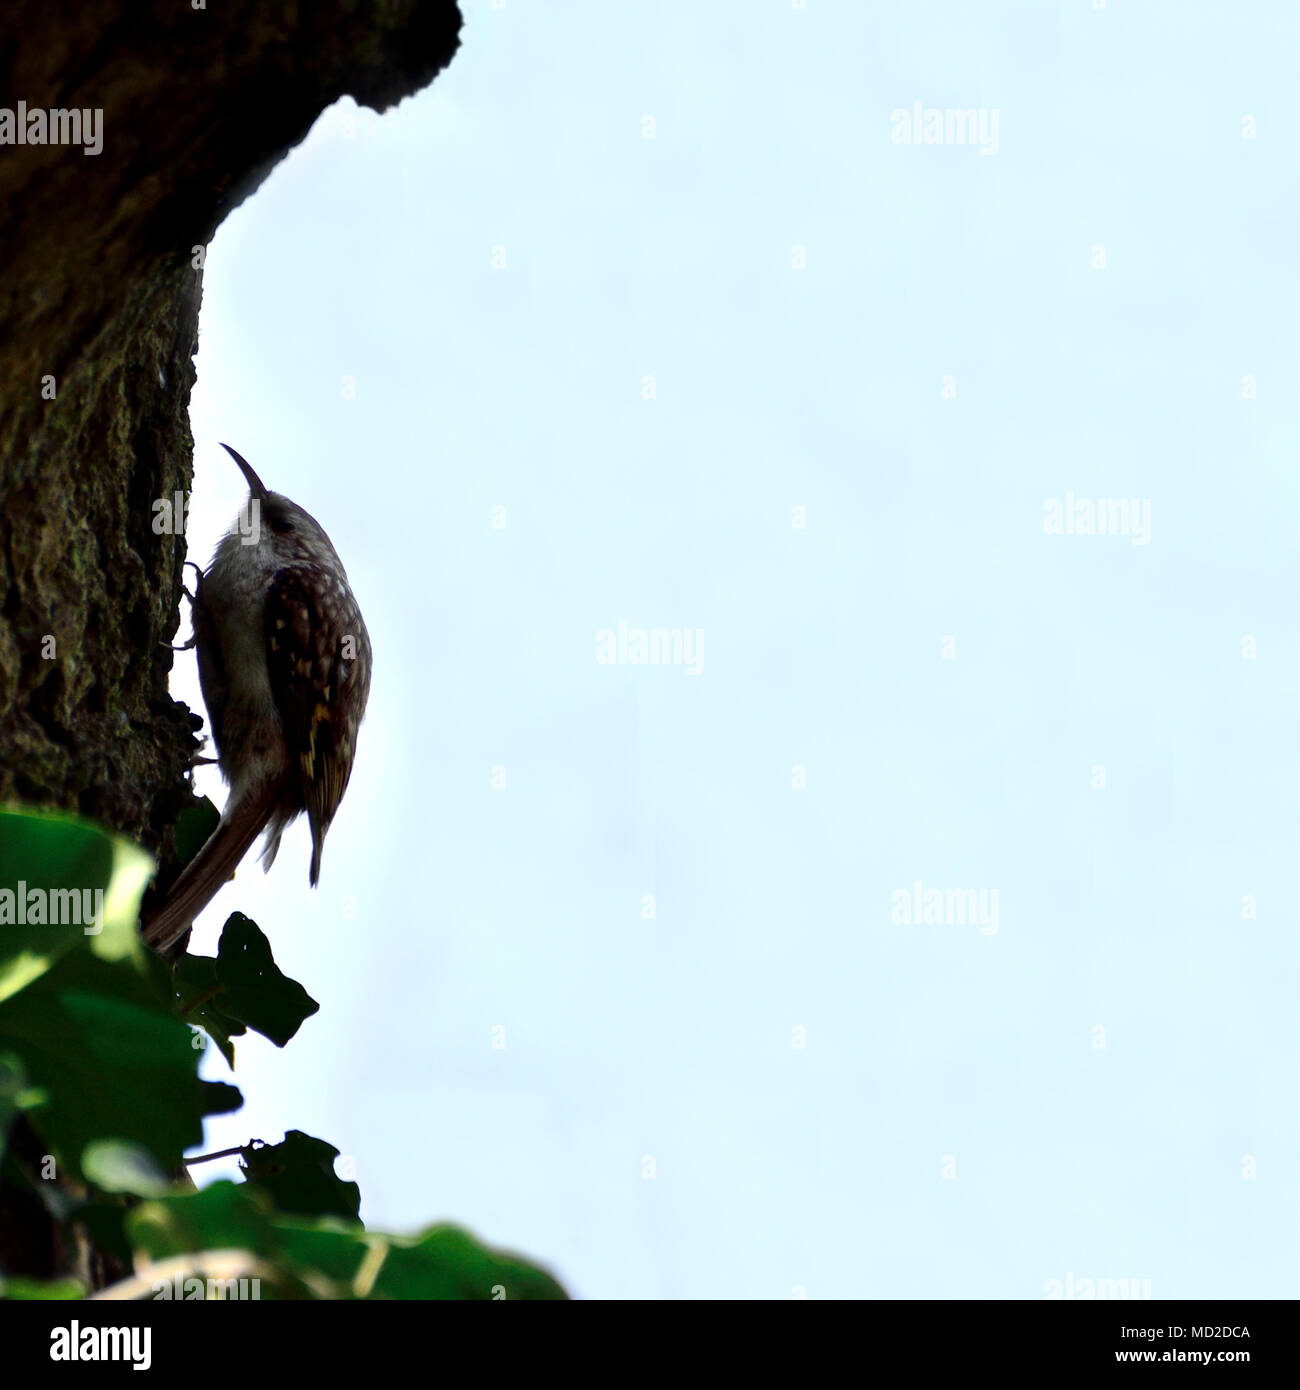 Eurasian treecreeper / Common treecreeper (Certhia familiaris) creeping up a tree Stock Photo